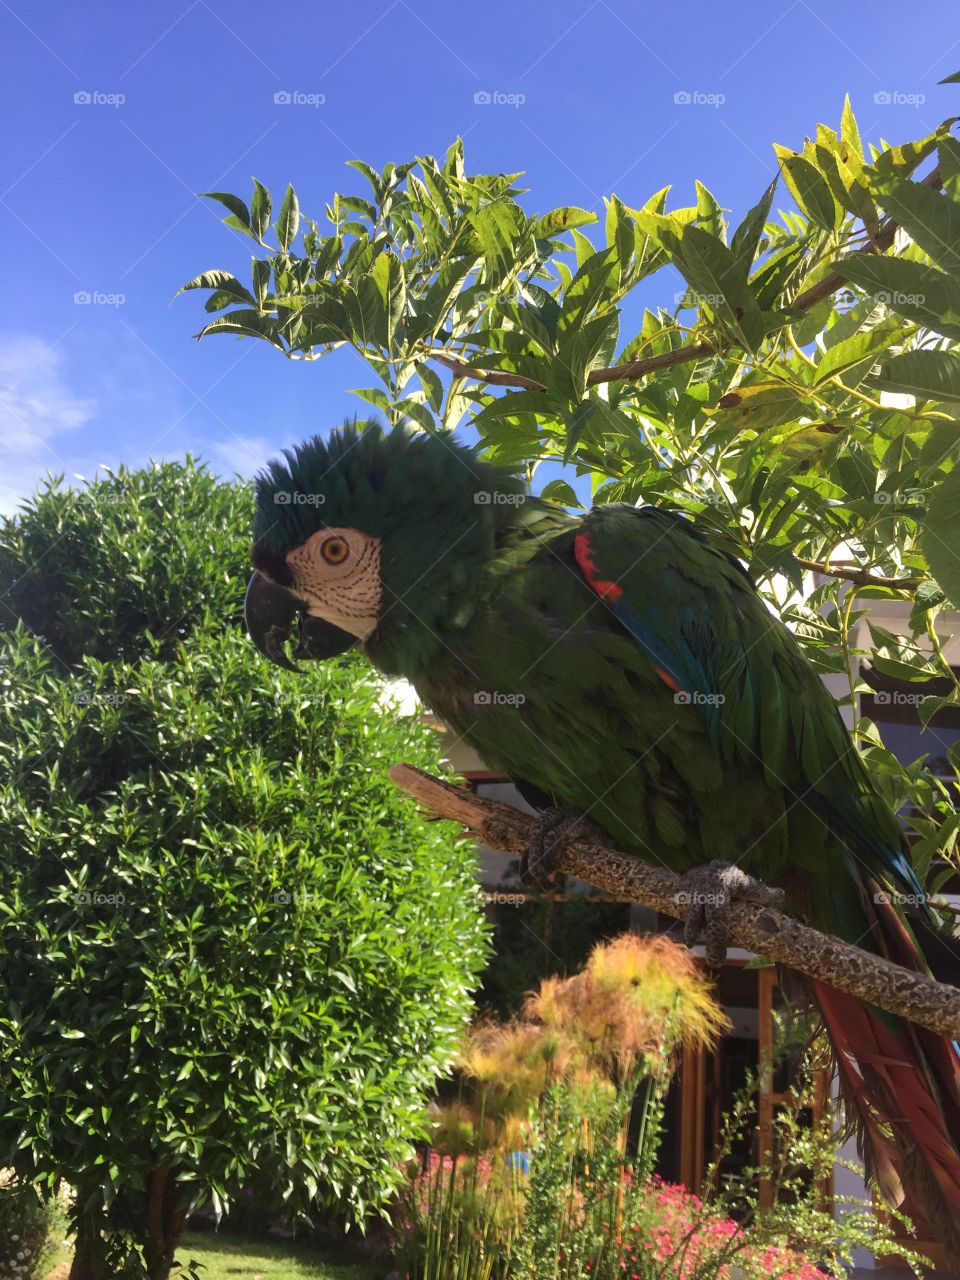 Parrot. Parrot sitting in our hostel garden in Peru